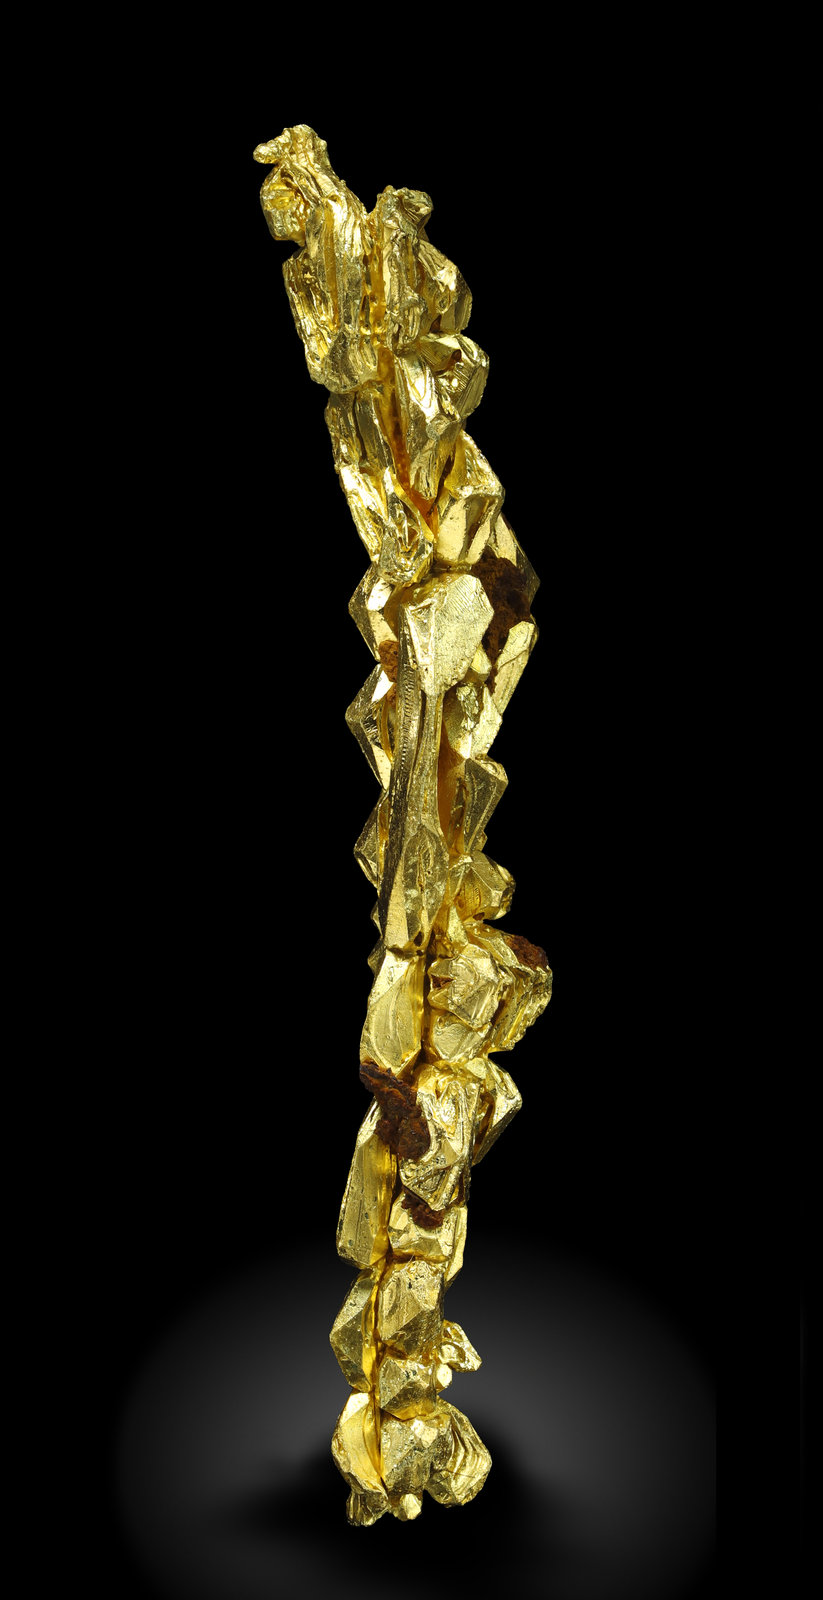 specimens/s_imagesAM5/Gold-MK36AM5_0692_s.jpg